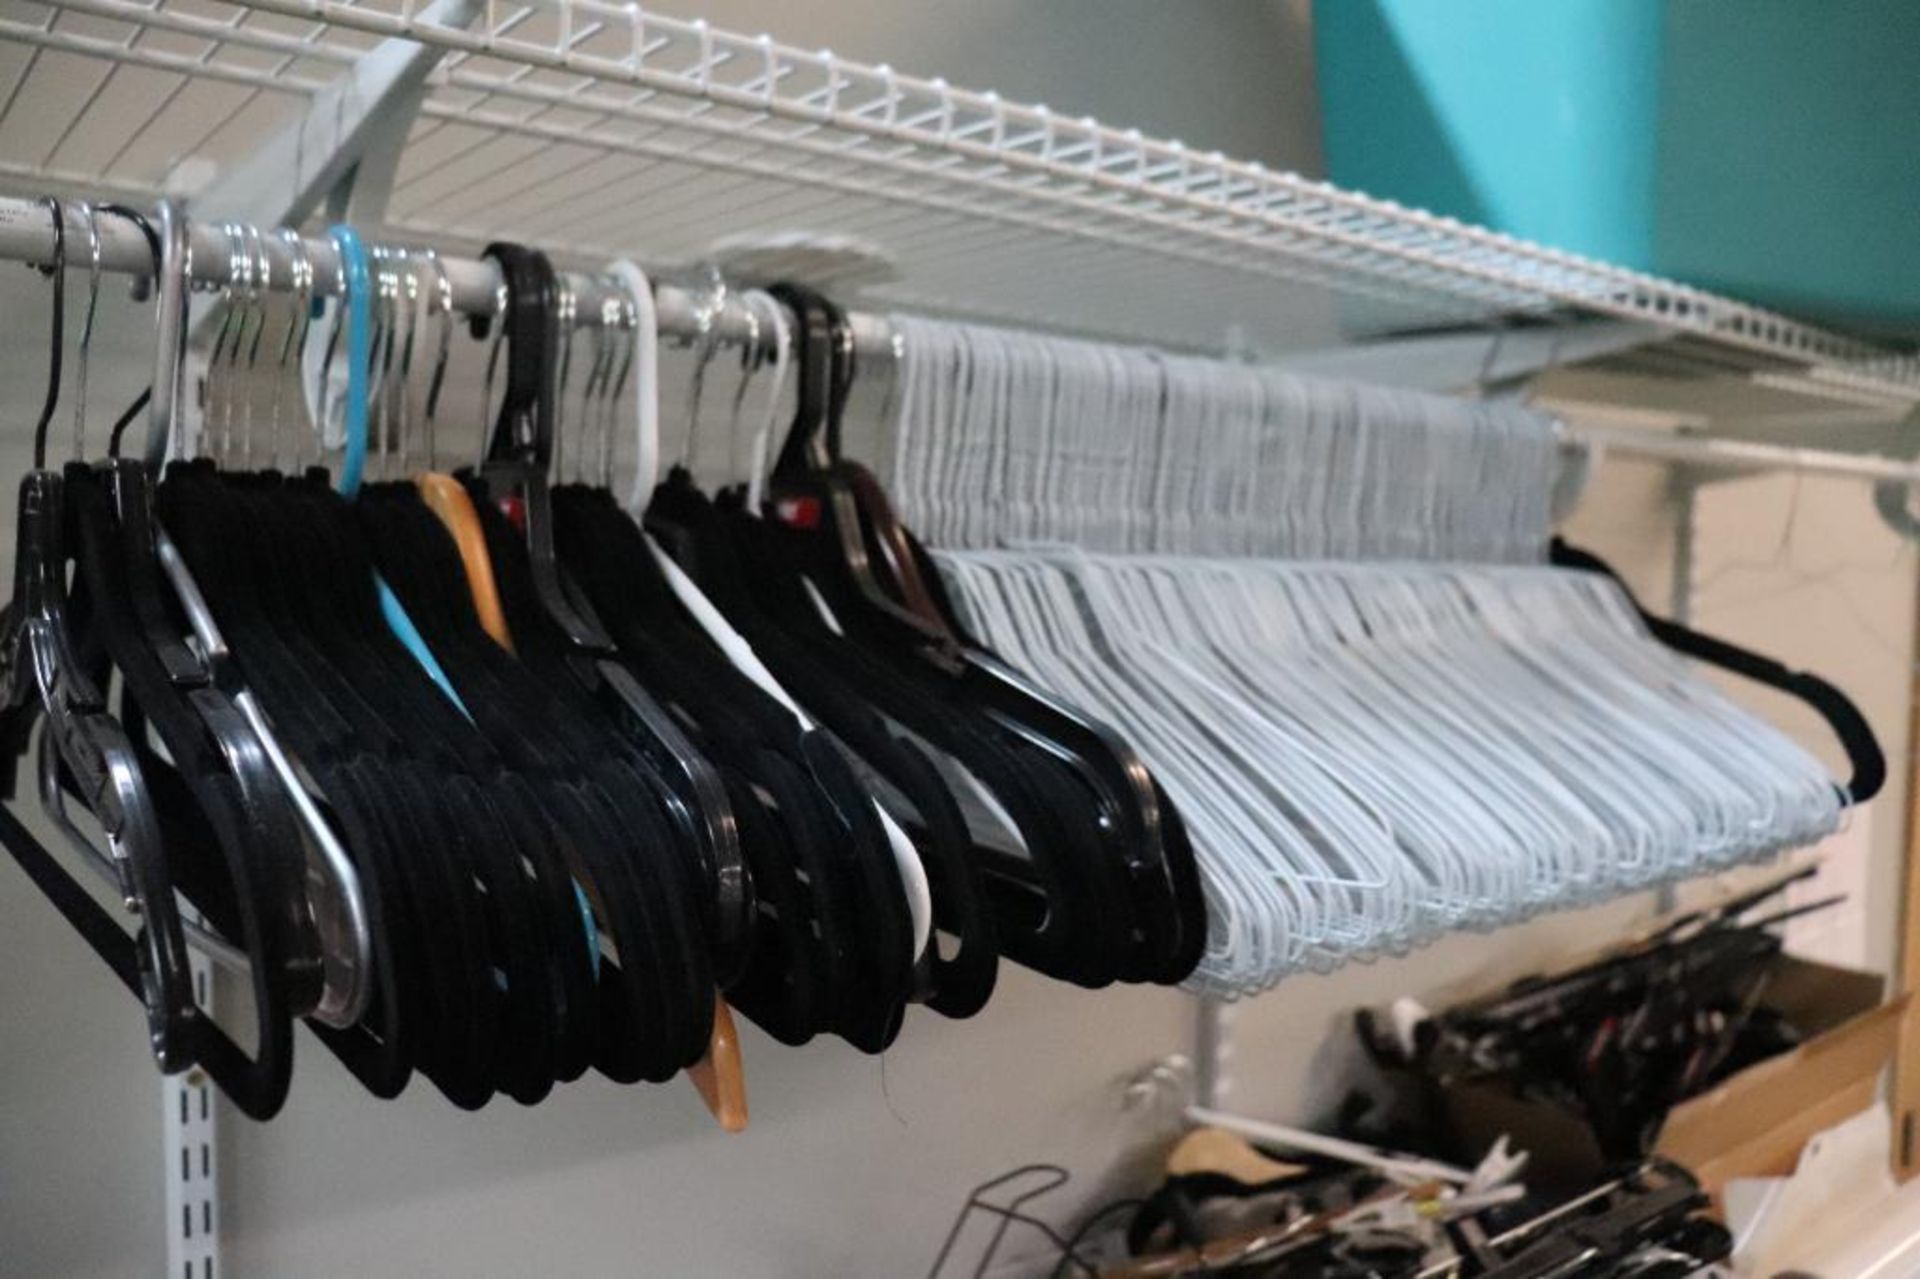 Closet shelving w/ hangers - Image 3 of 7